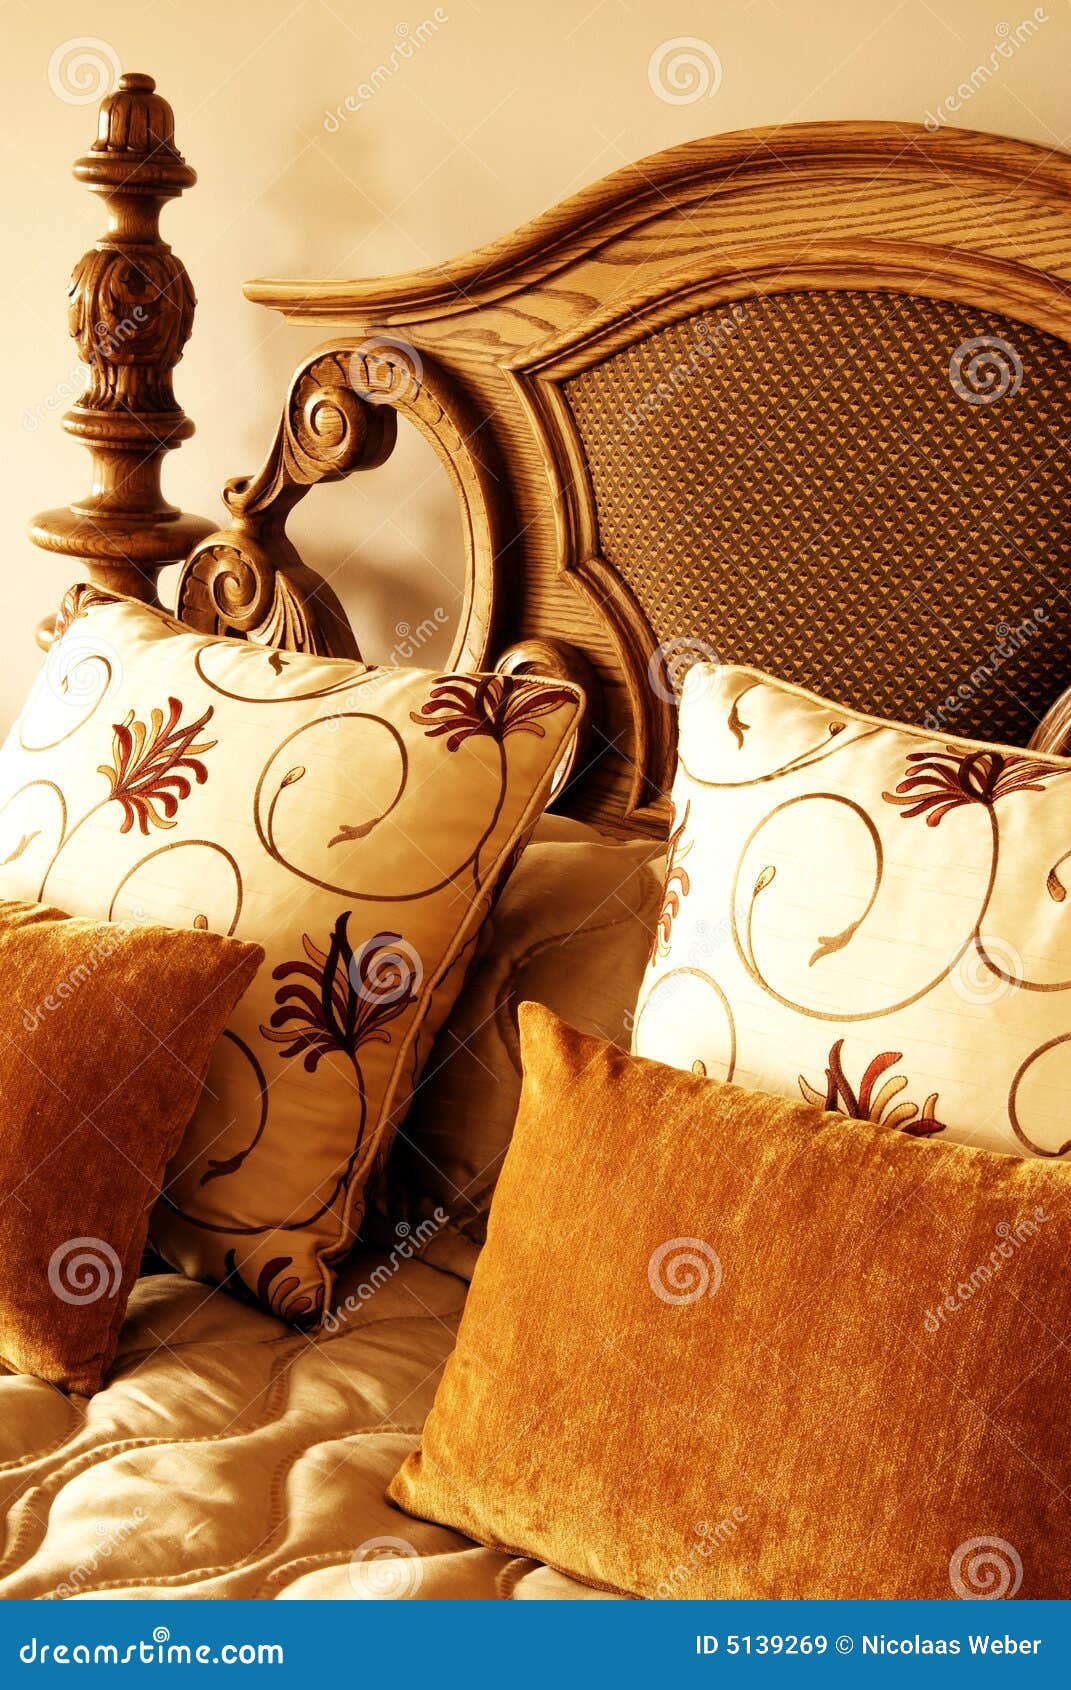 624 Bed Back Cushion Stock Photos - Free & Royalty-Free Stock